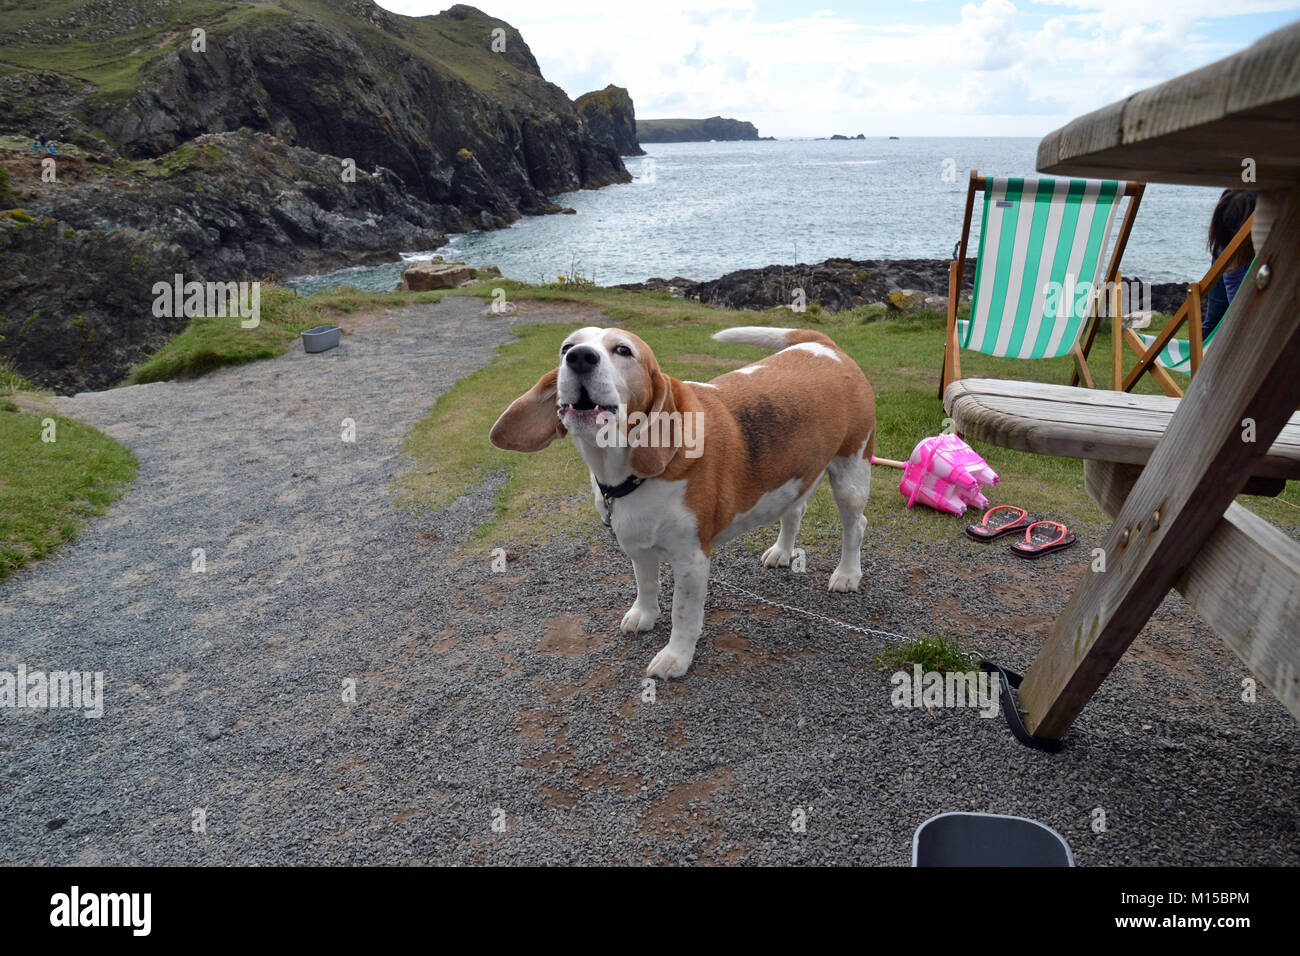 Howling dog at Kynance Cove Cafe, Lizard Peninsula, Cornwall, UK. Beagle / basset hound / cross / mongrel Stock Photo